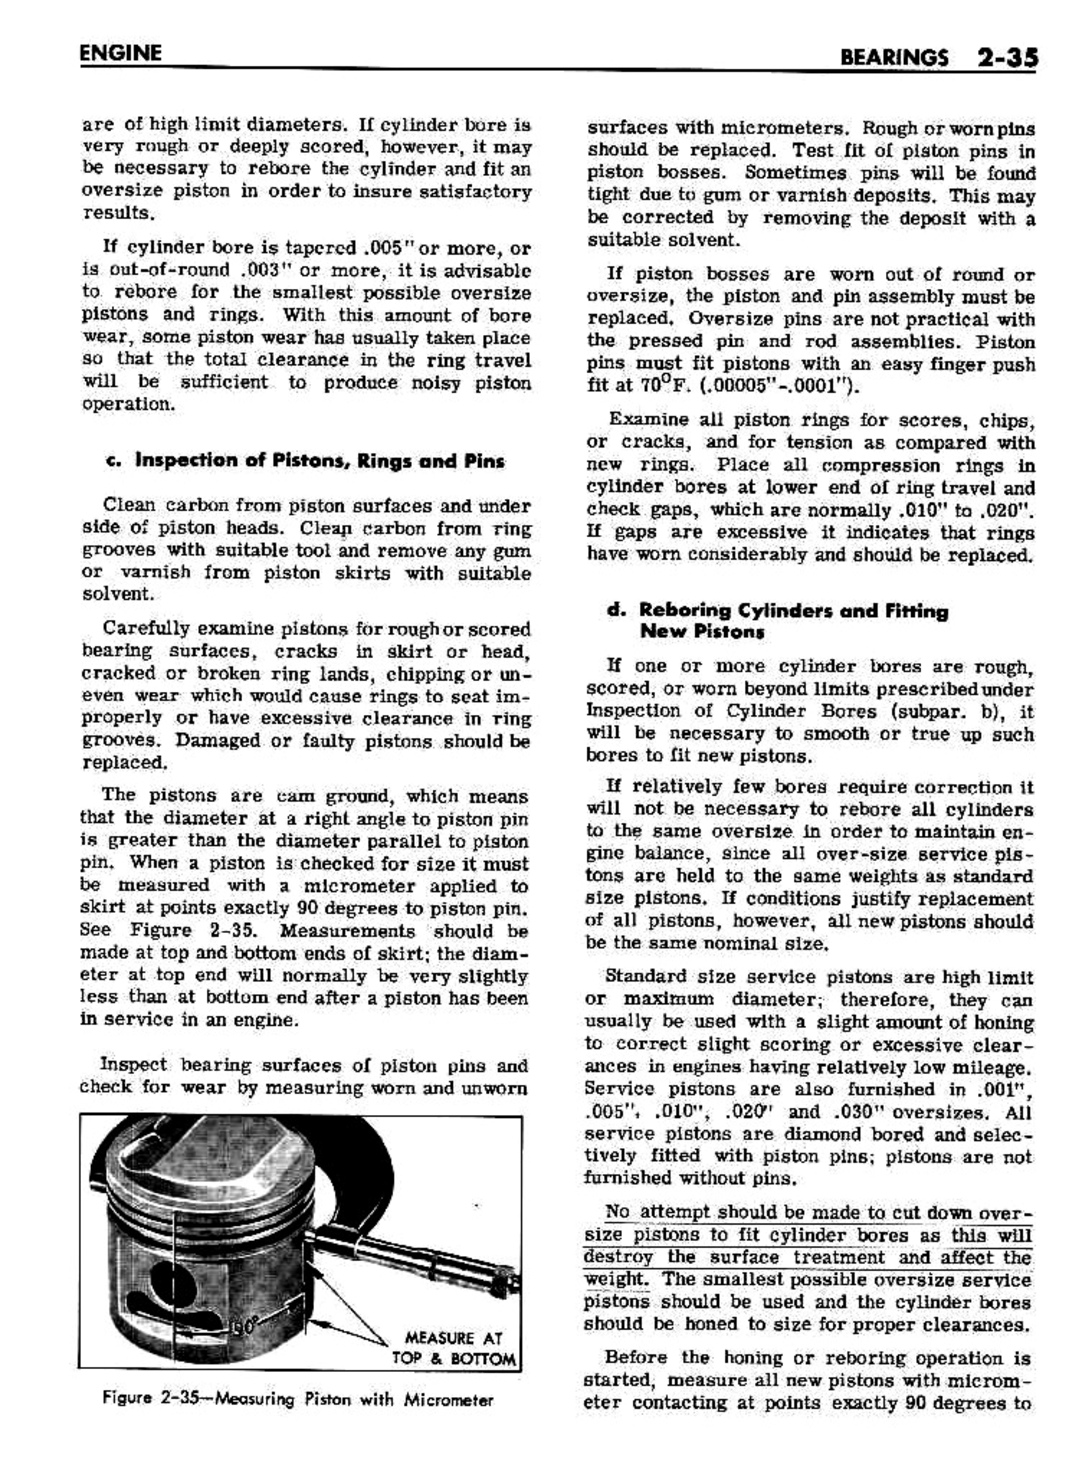 n_03 1961 Buick Shop Manual - Engine-035-035.jpg